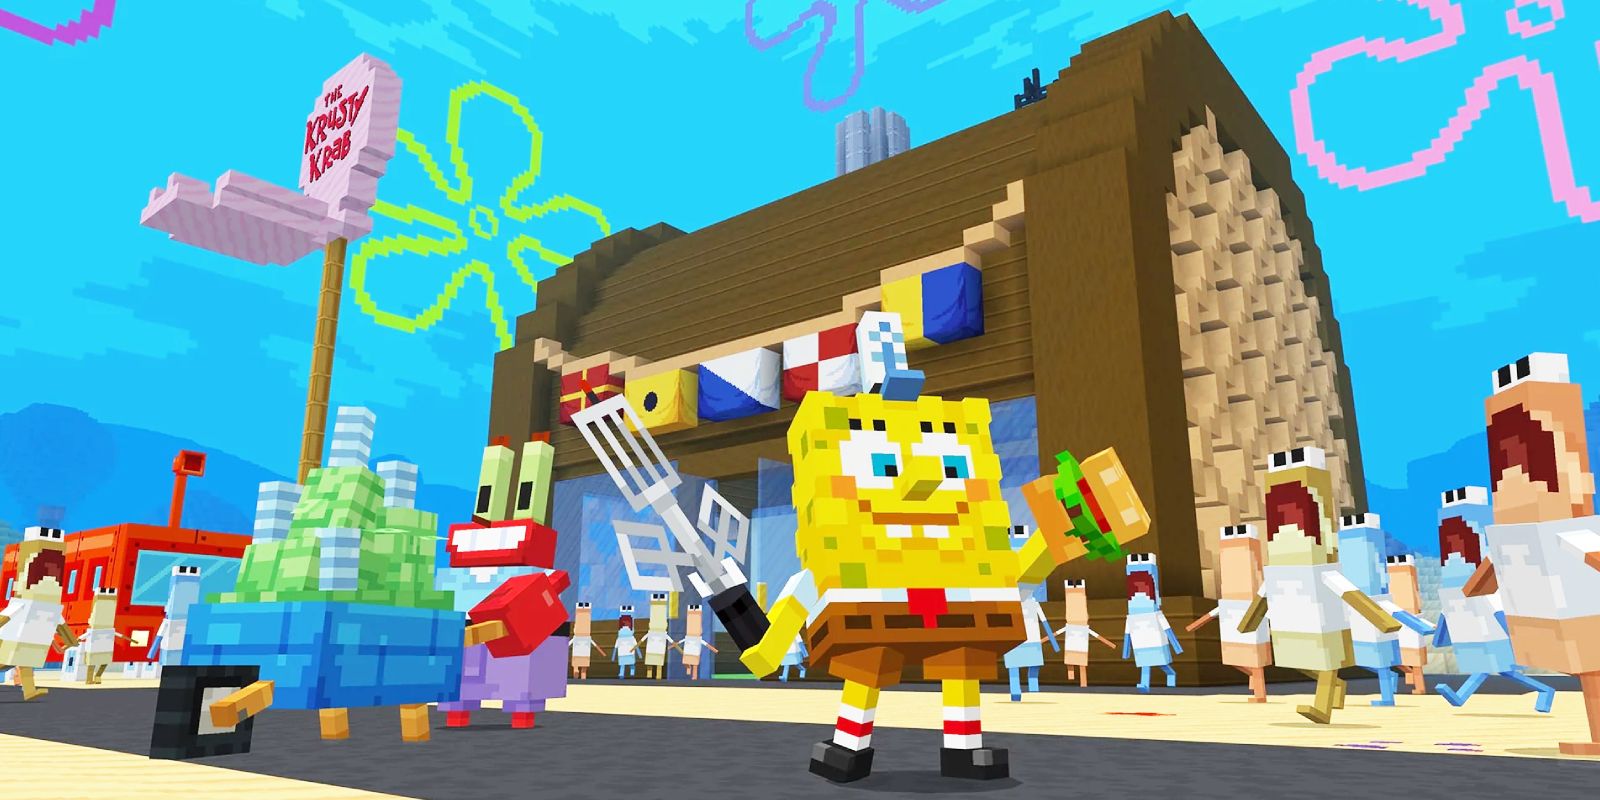 Cada personaje de SpongeBob SquarePants en el último DLC de Minecraft